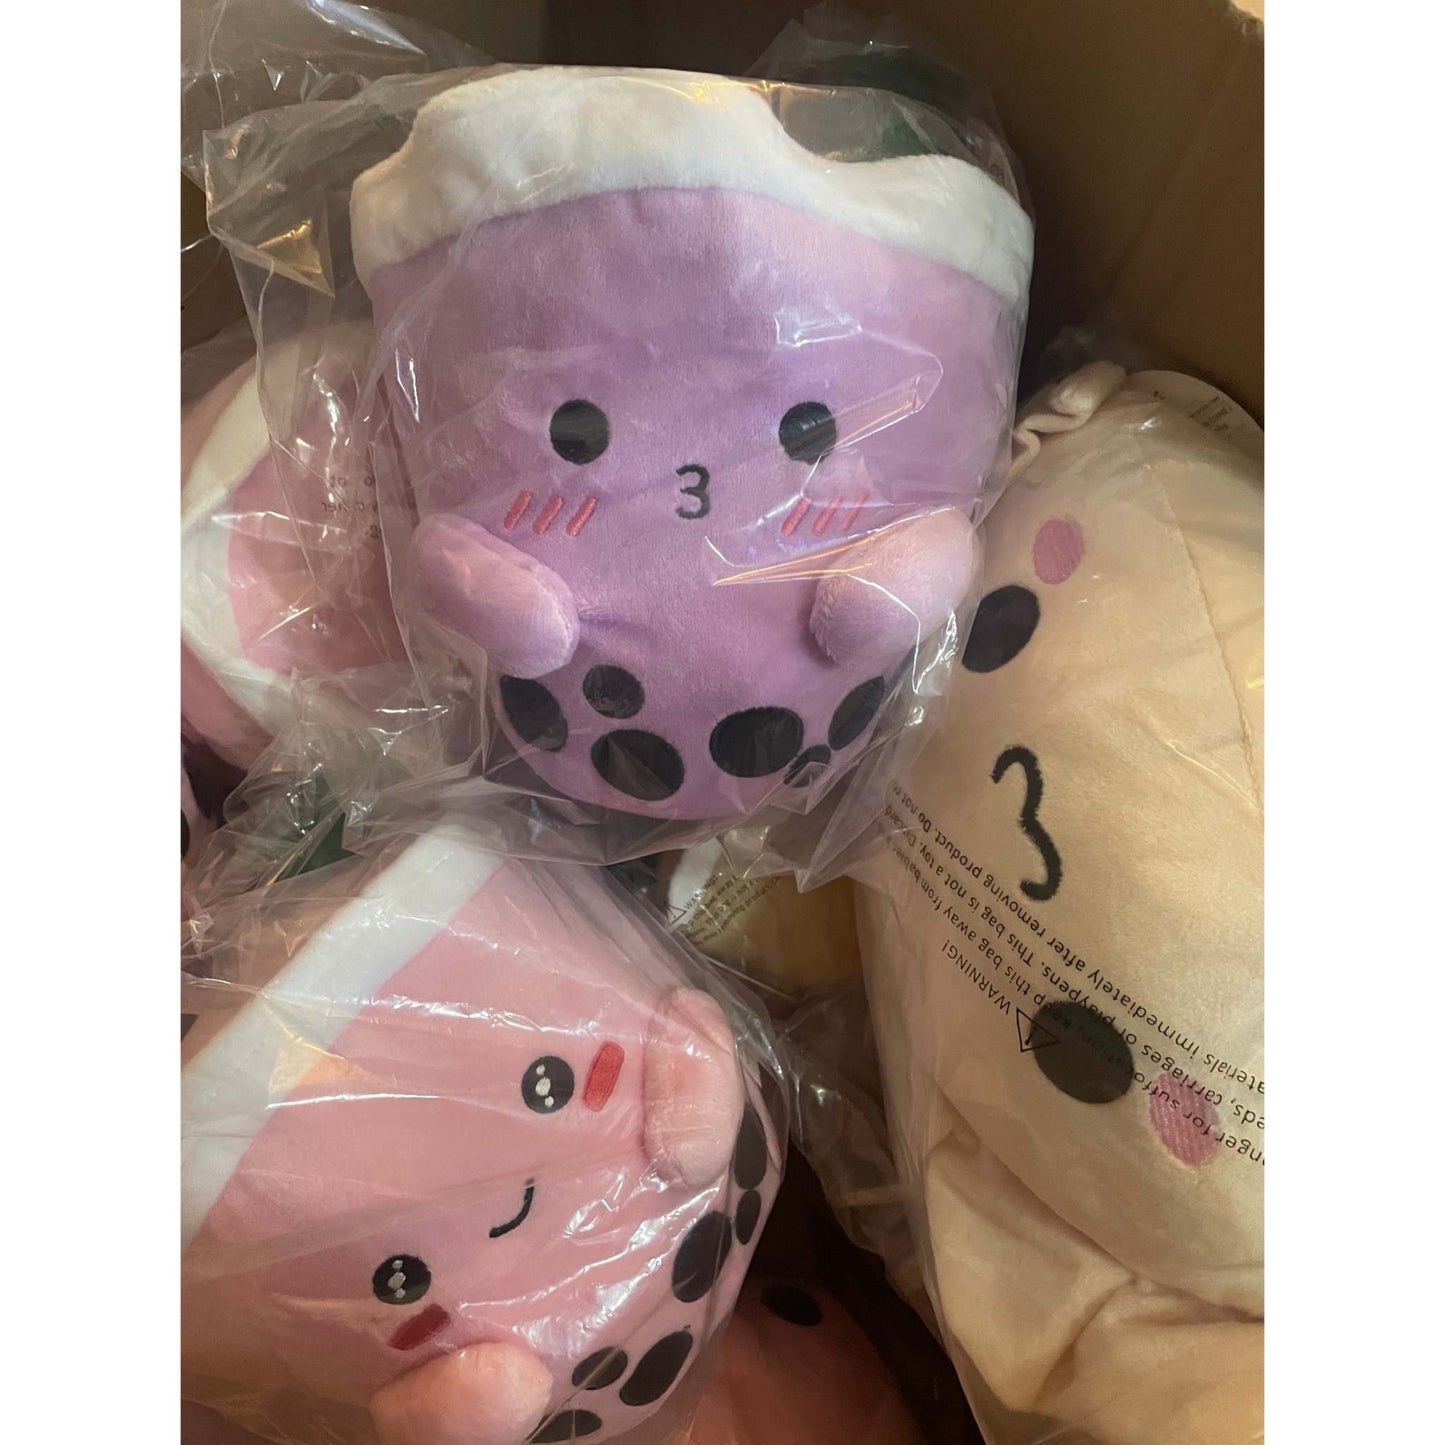 ABC Boba Tea Plush Purple Cute Stuffed Animal Toy 10" - Selzalot